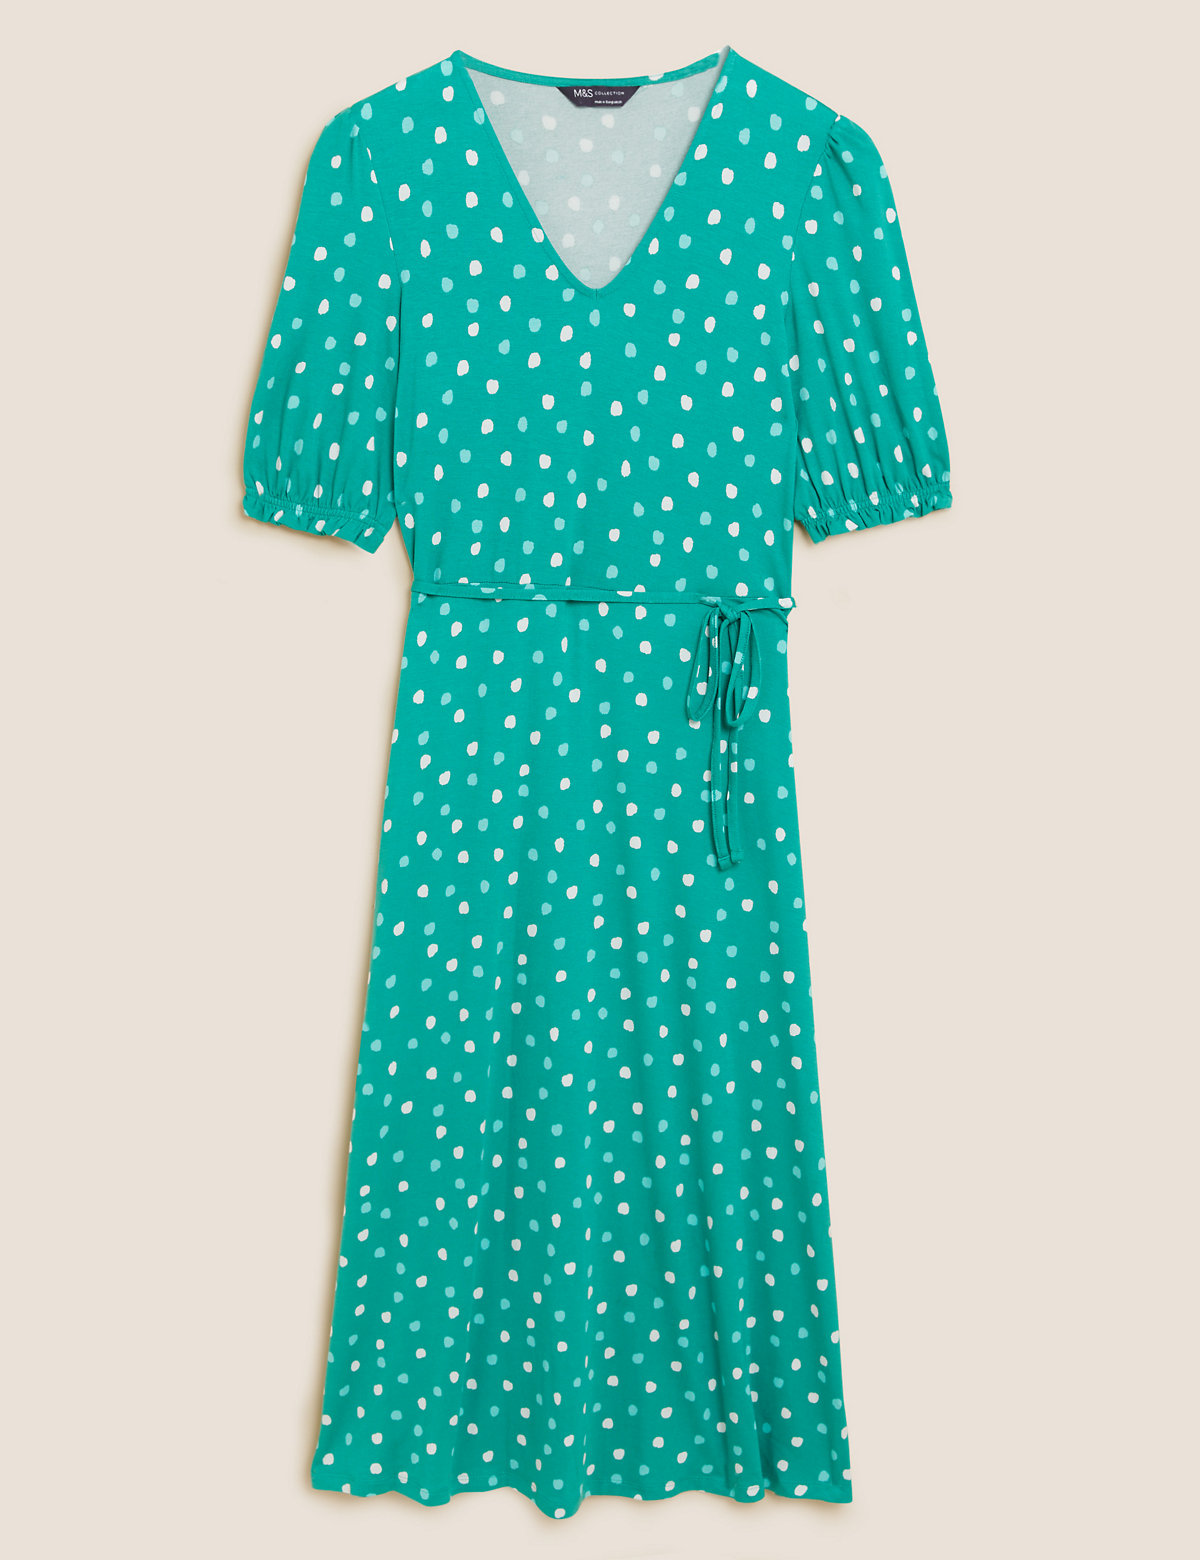 Jersey Polka Dot V-Neck Midi Tea Dress